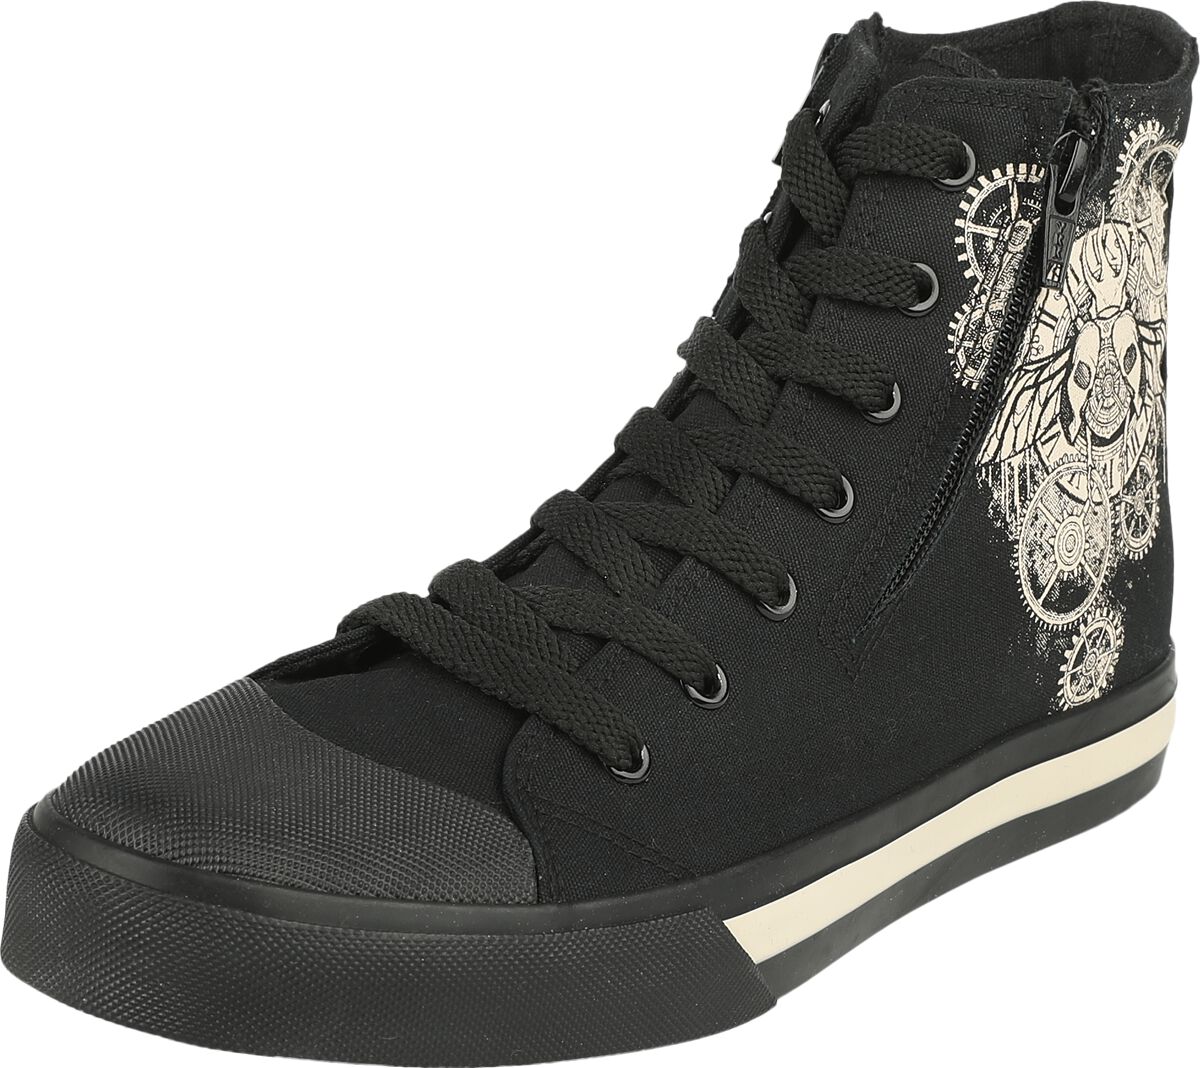 Gothicana by EMP - Gothic Sneaker high - Sneaker with Industrial Beetle Print - EU37 bis EU46 - Größe EU42 - schwarz